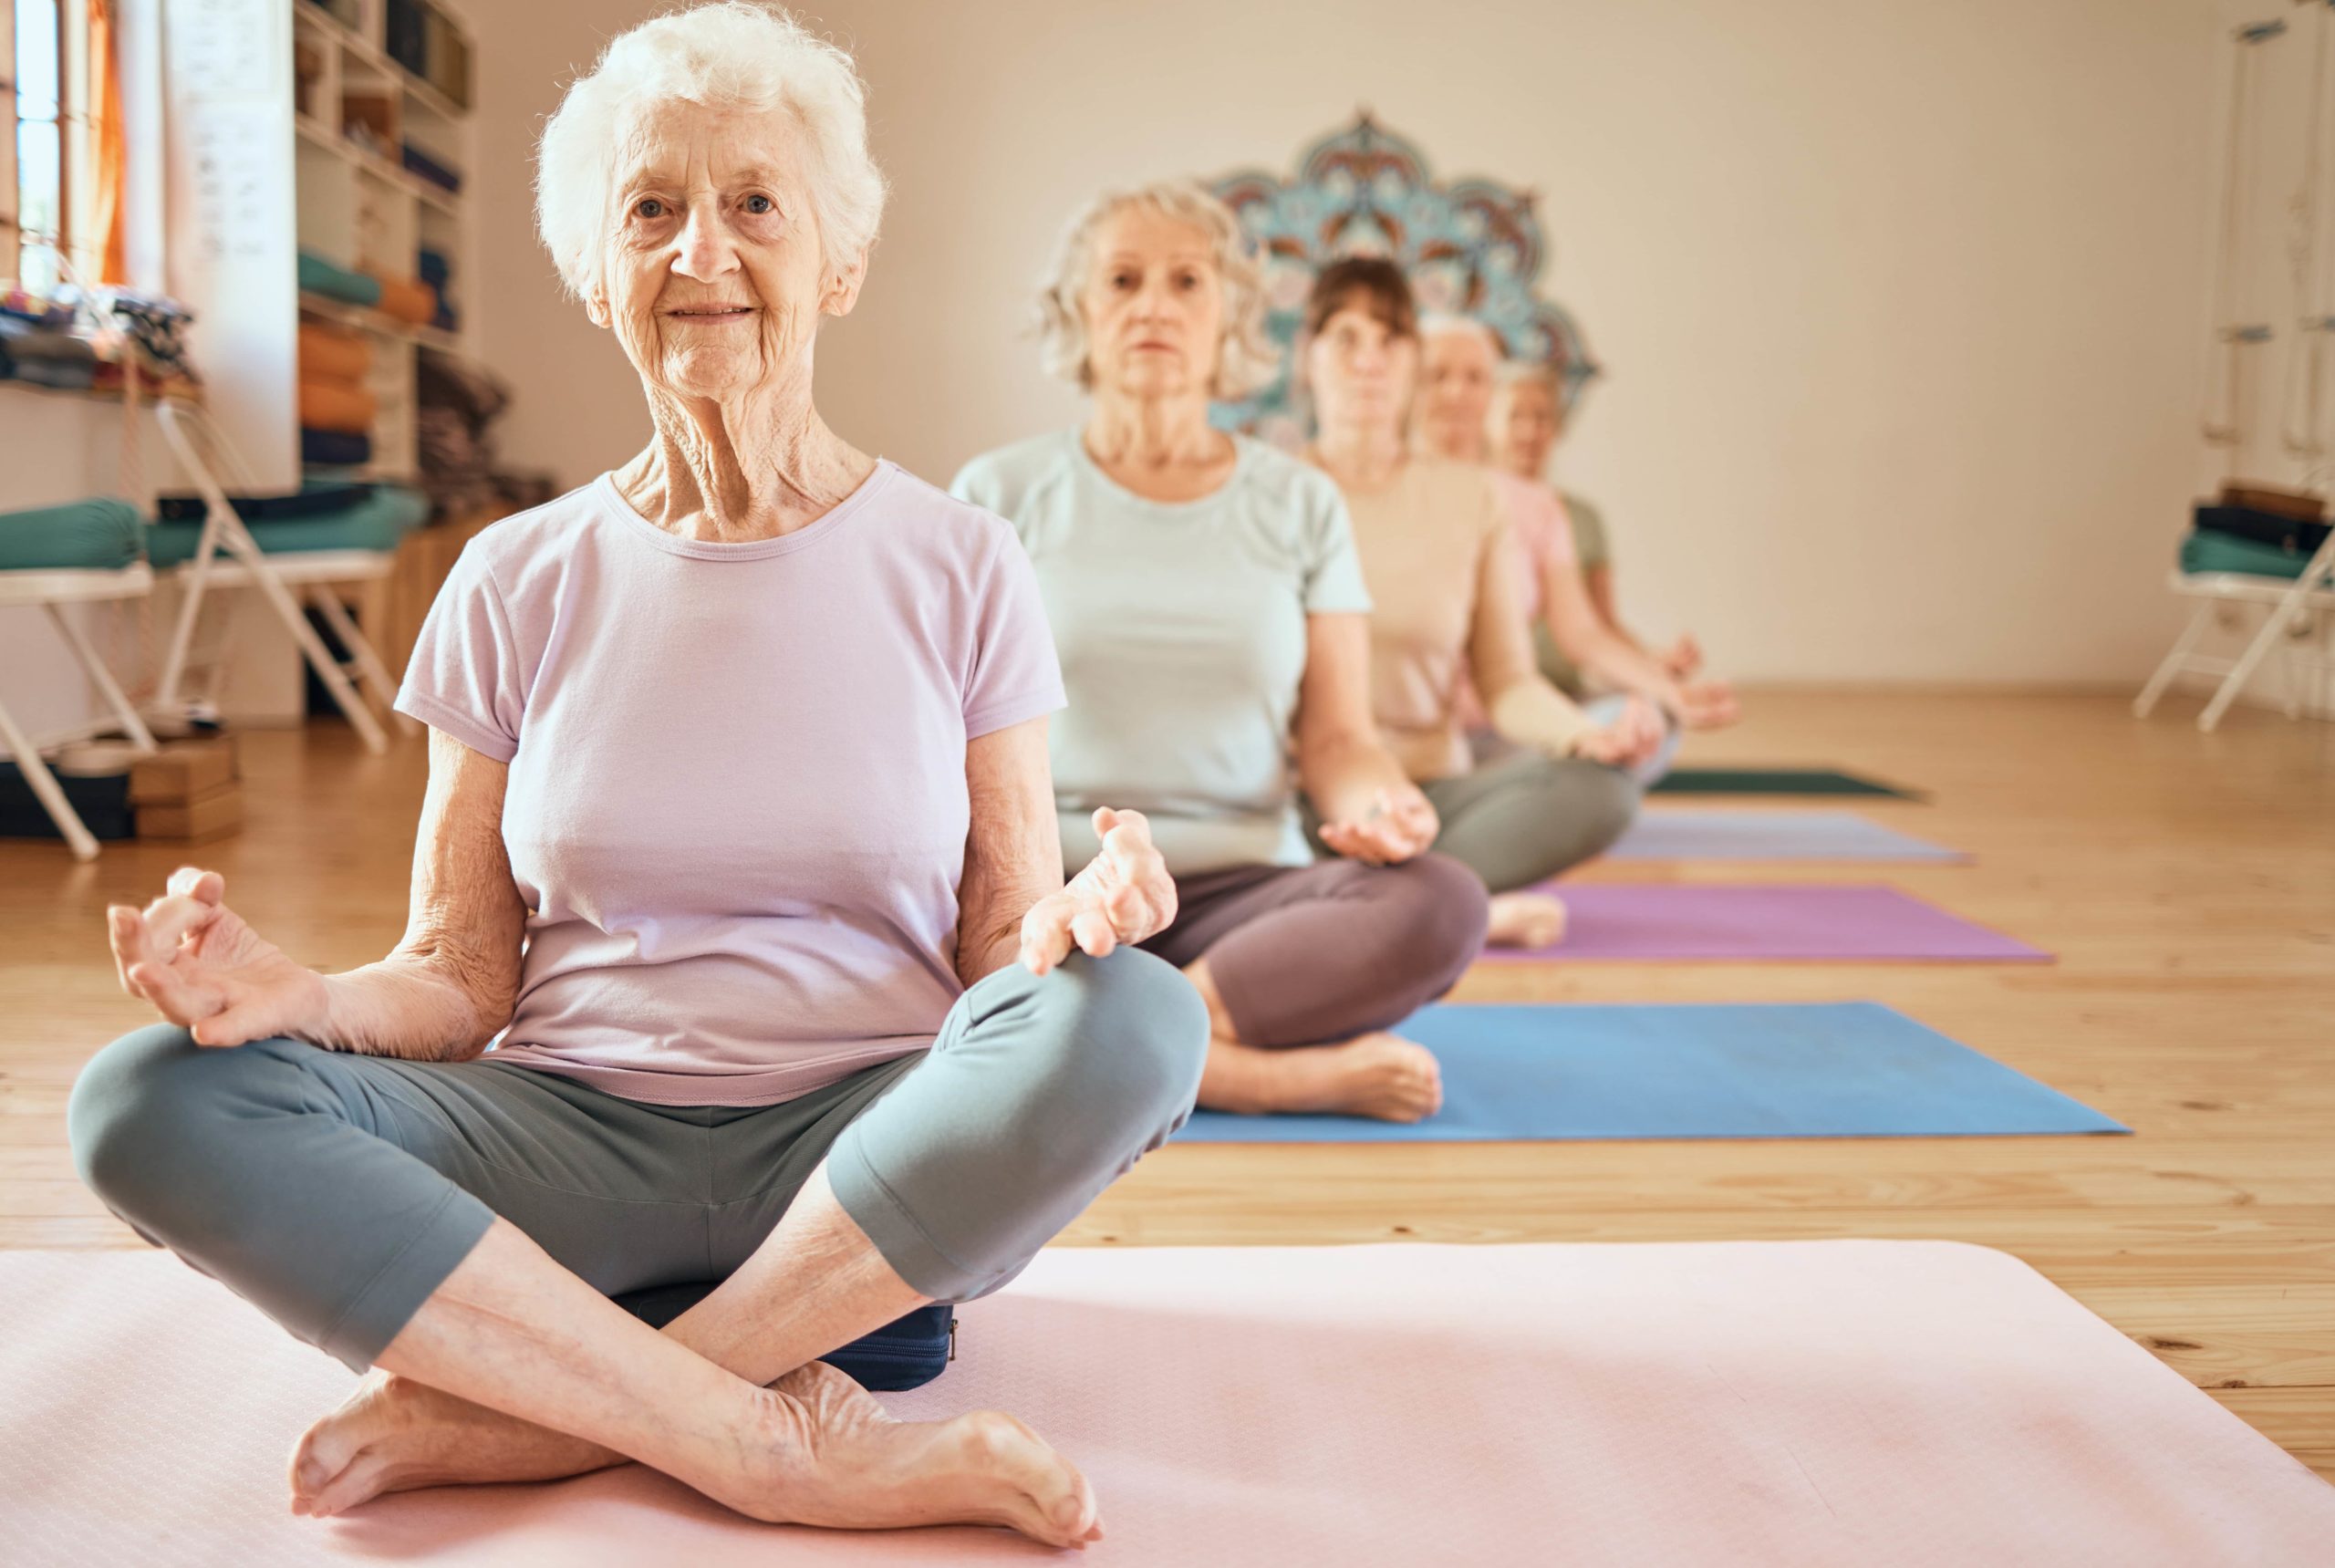 clarissa dioquino recommends older women doing yoga pic